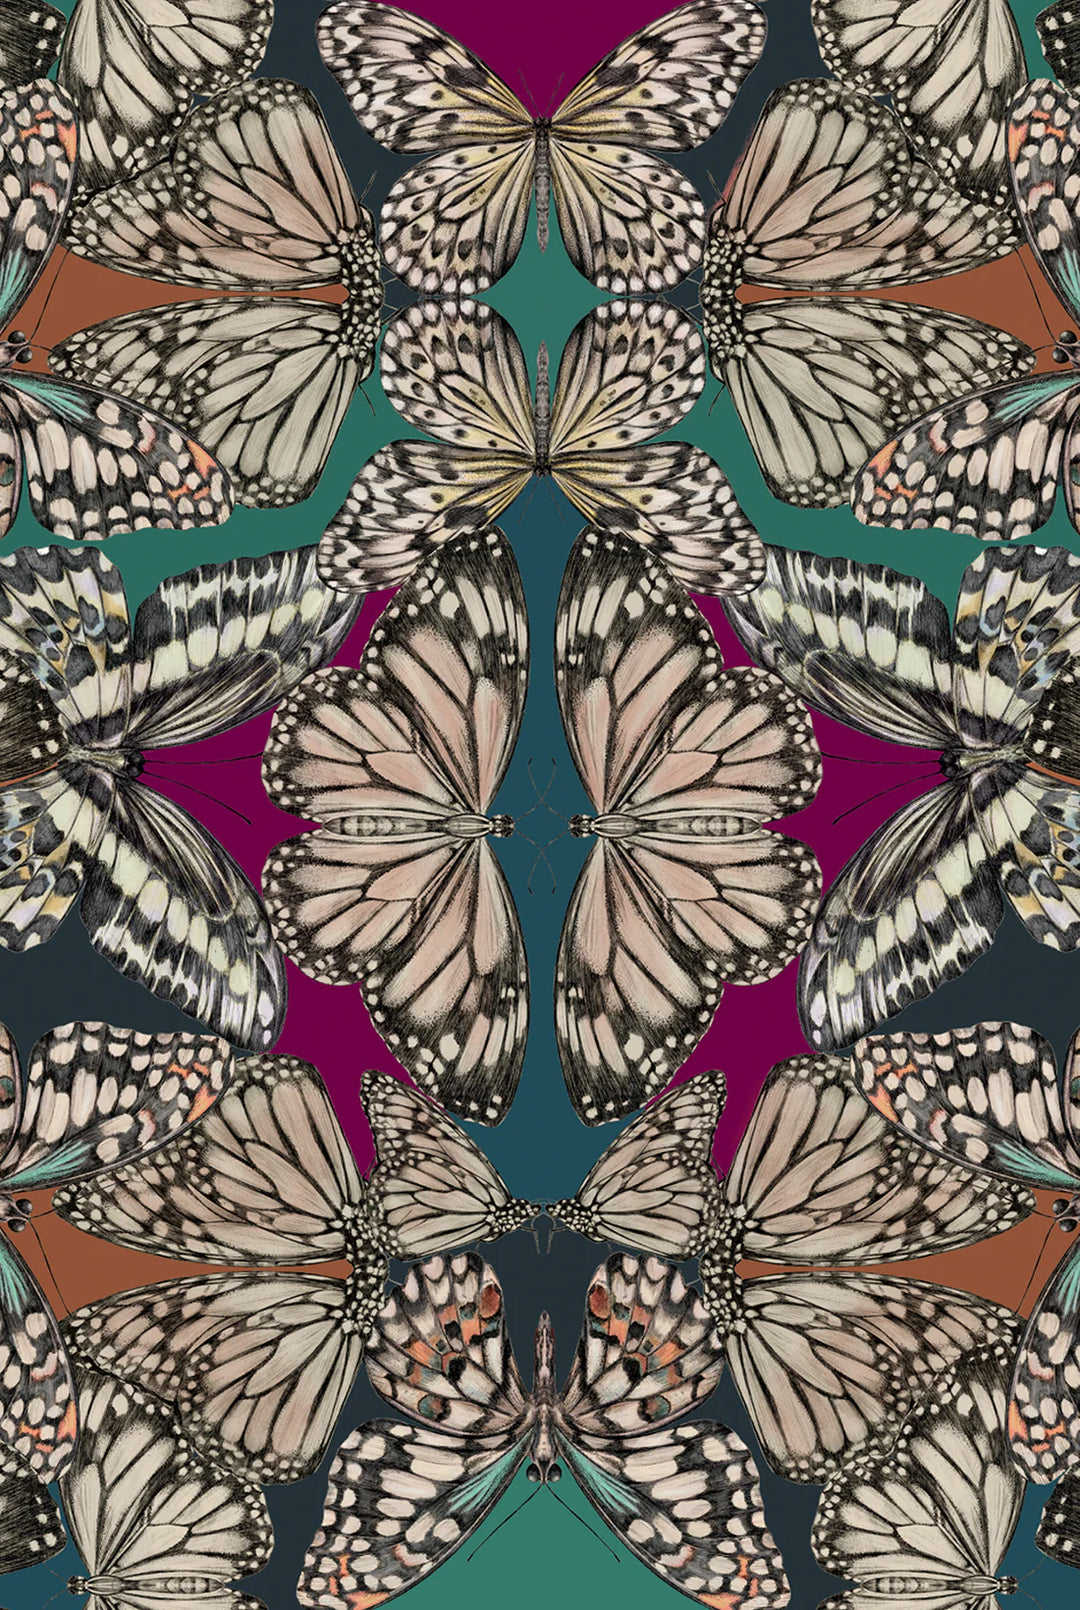 Victoria-Sanders-collection-kaleidoscopic-illusion-wallpaper-hand-drawn-butterflies-jewel-tones-magenta-turquiose-petrol-sienna